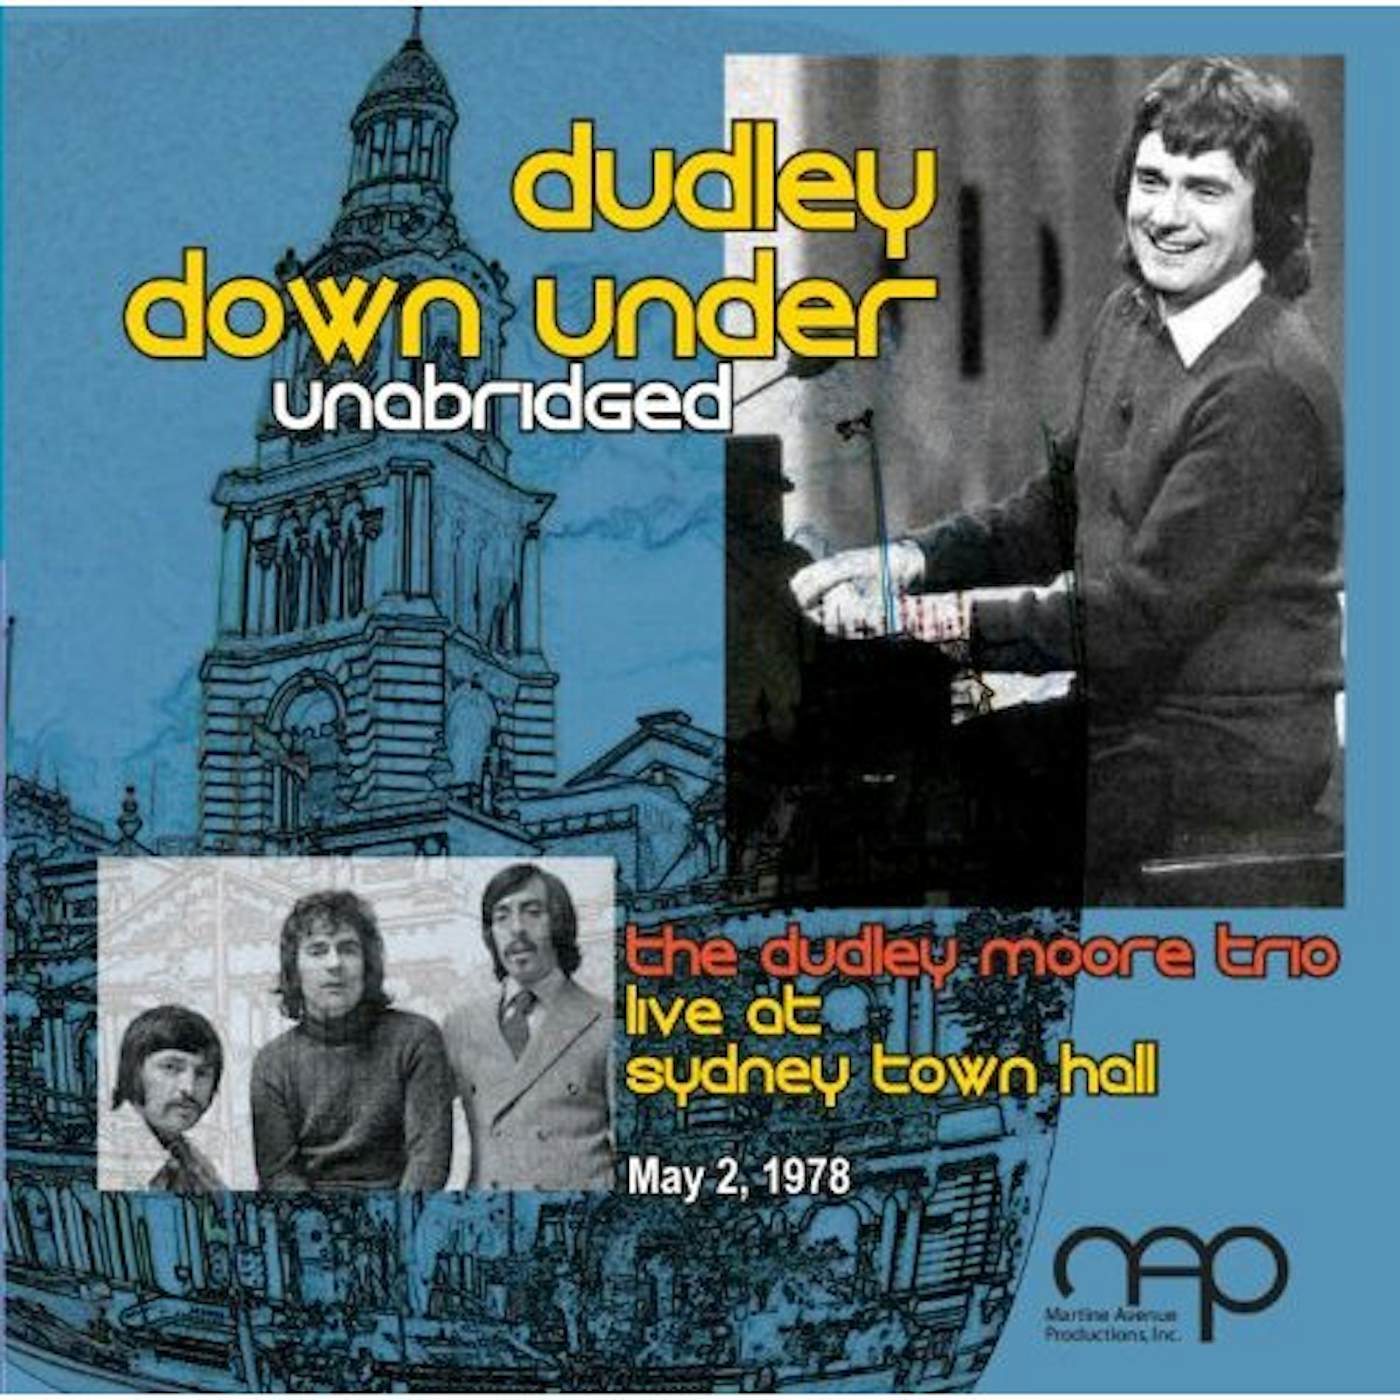 Dudley Moore DUDLEY DOWN UNDER-UNABRIDGED CD